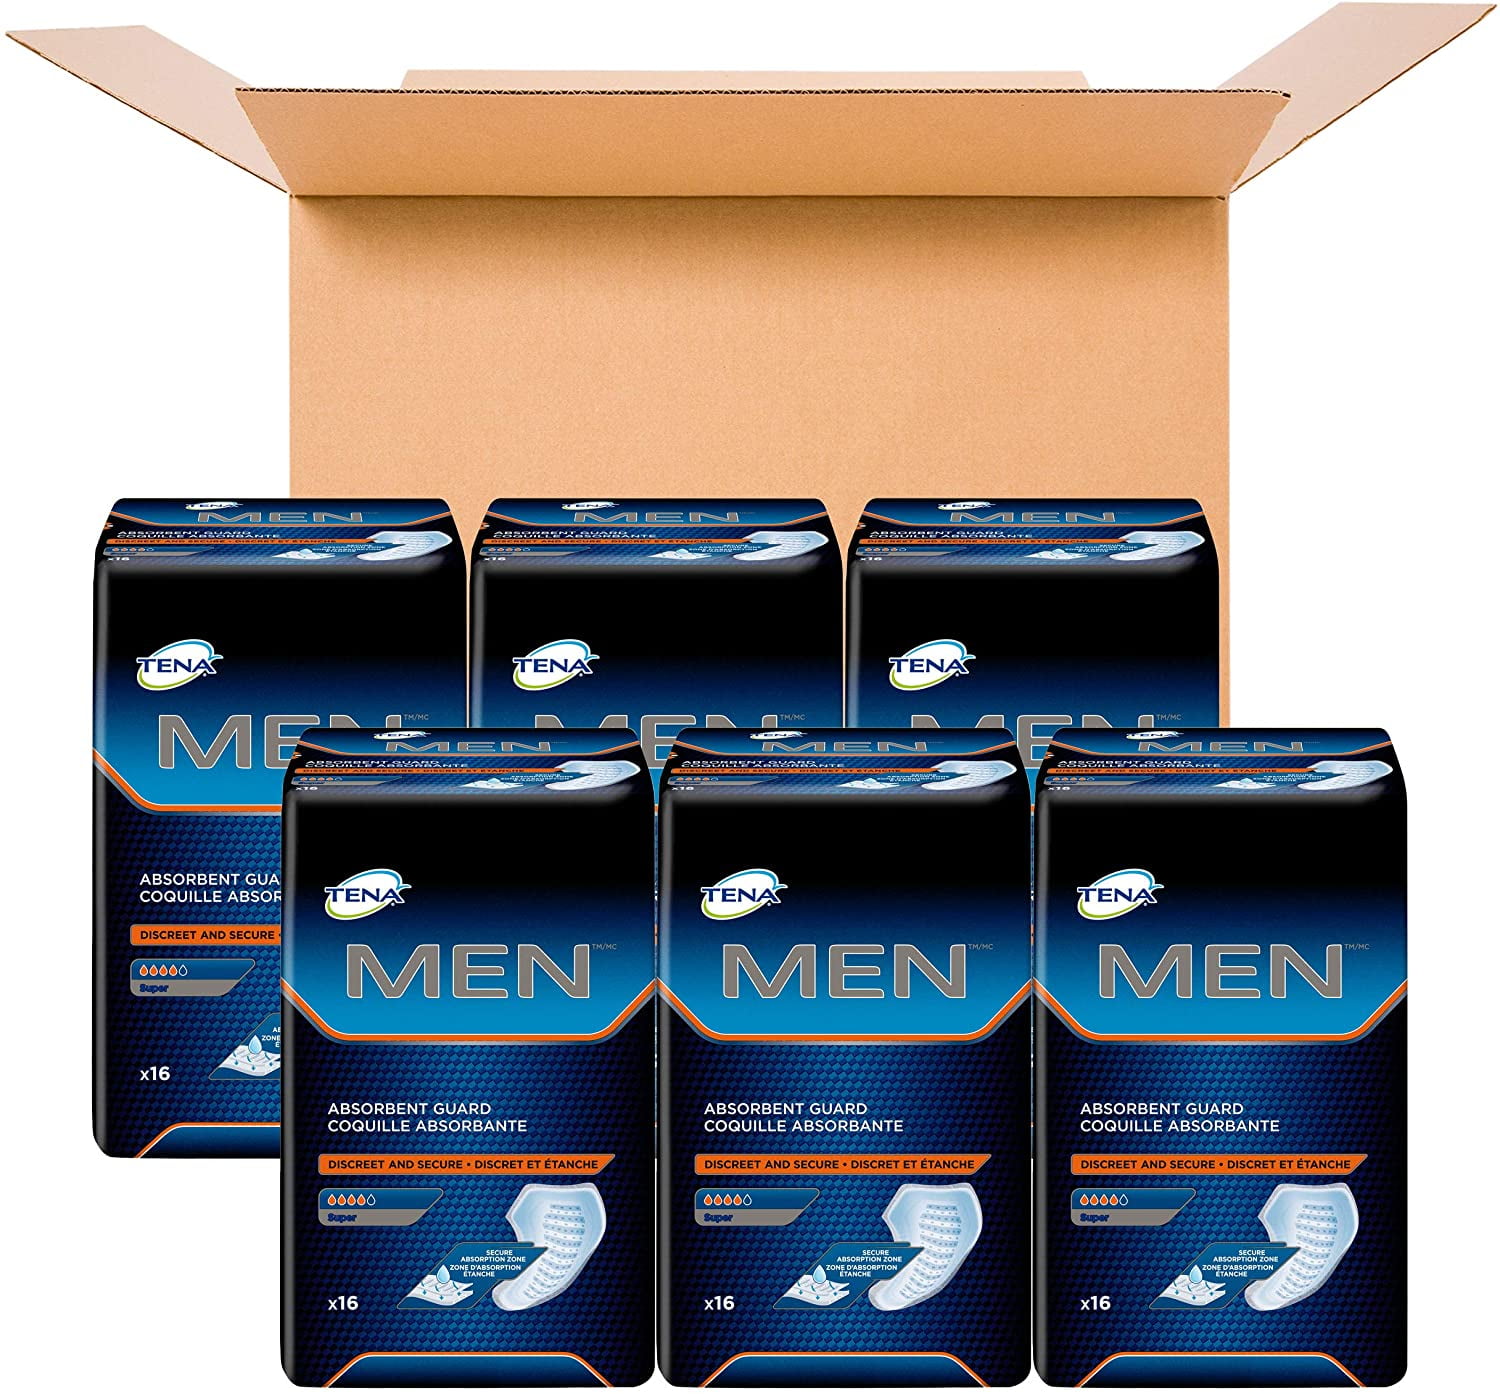 Buy Tena Men Level 3 Guards 8 Pack Online at Chemist Warehouse®